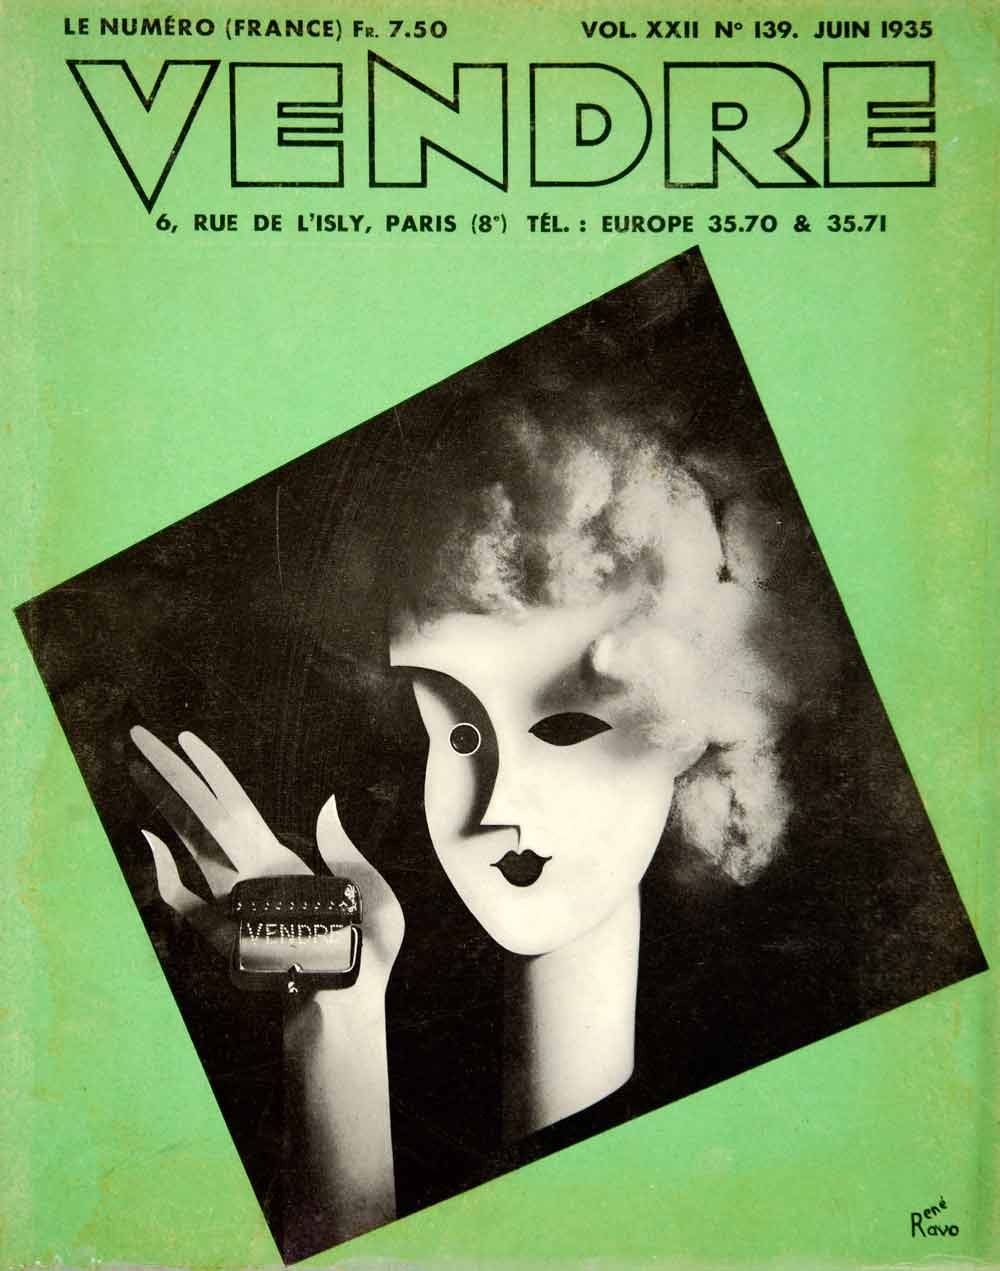 1935 Cover Vendre French Magazine Rene Ravo Art Deco Illustration Woman VEN9